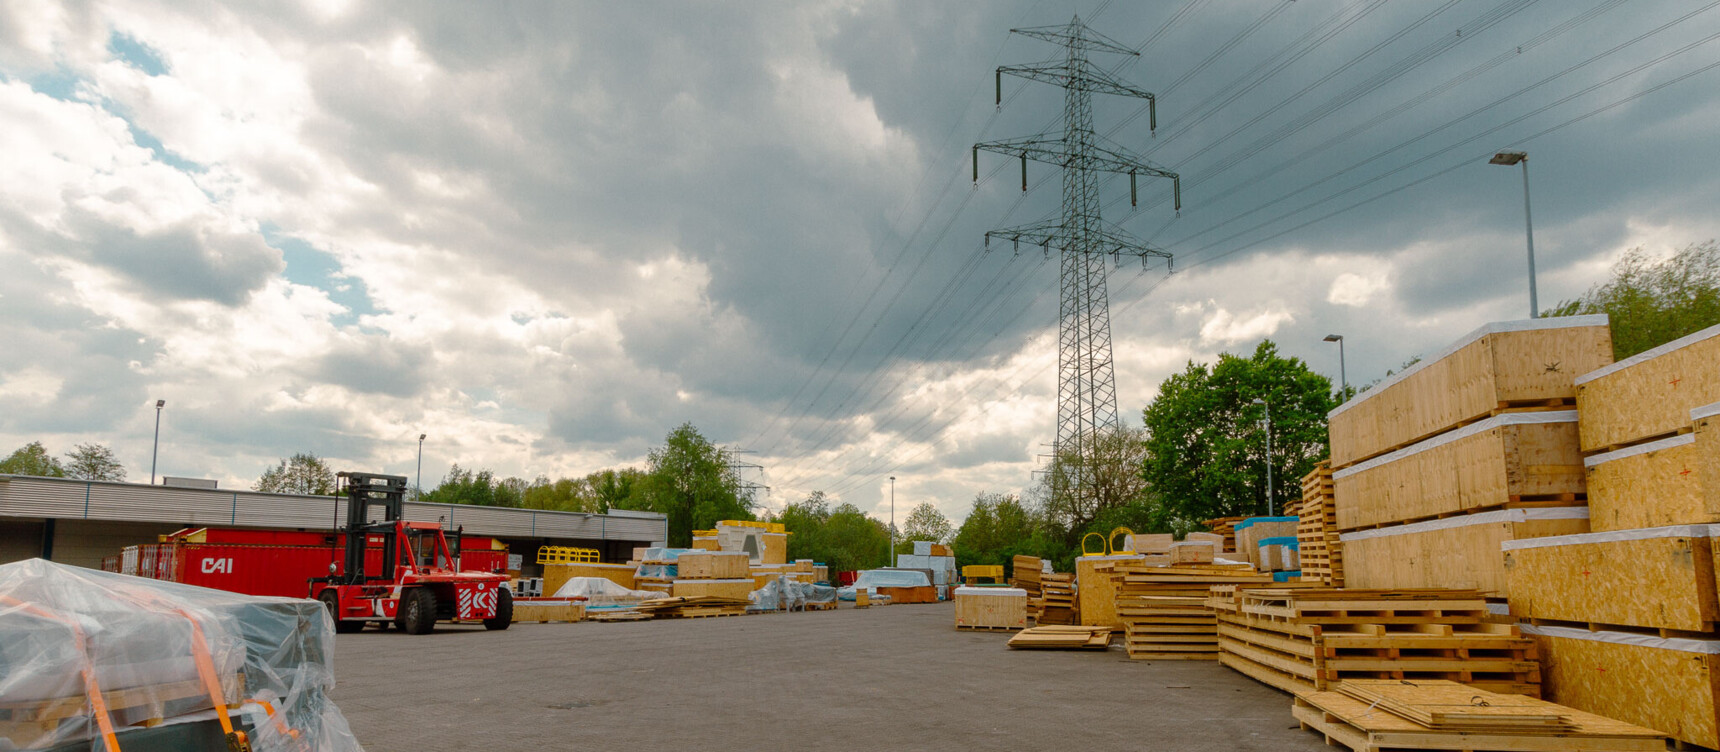 Storage yard in the industrial park